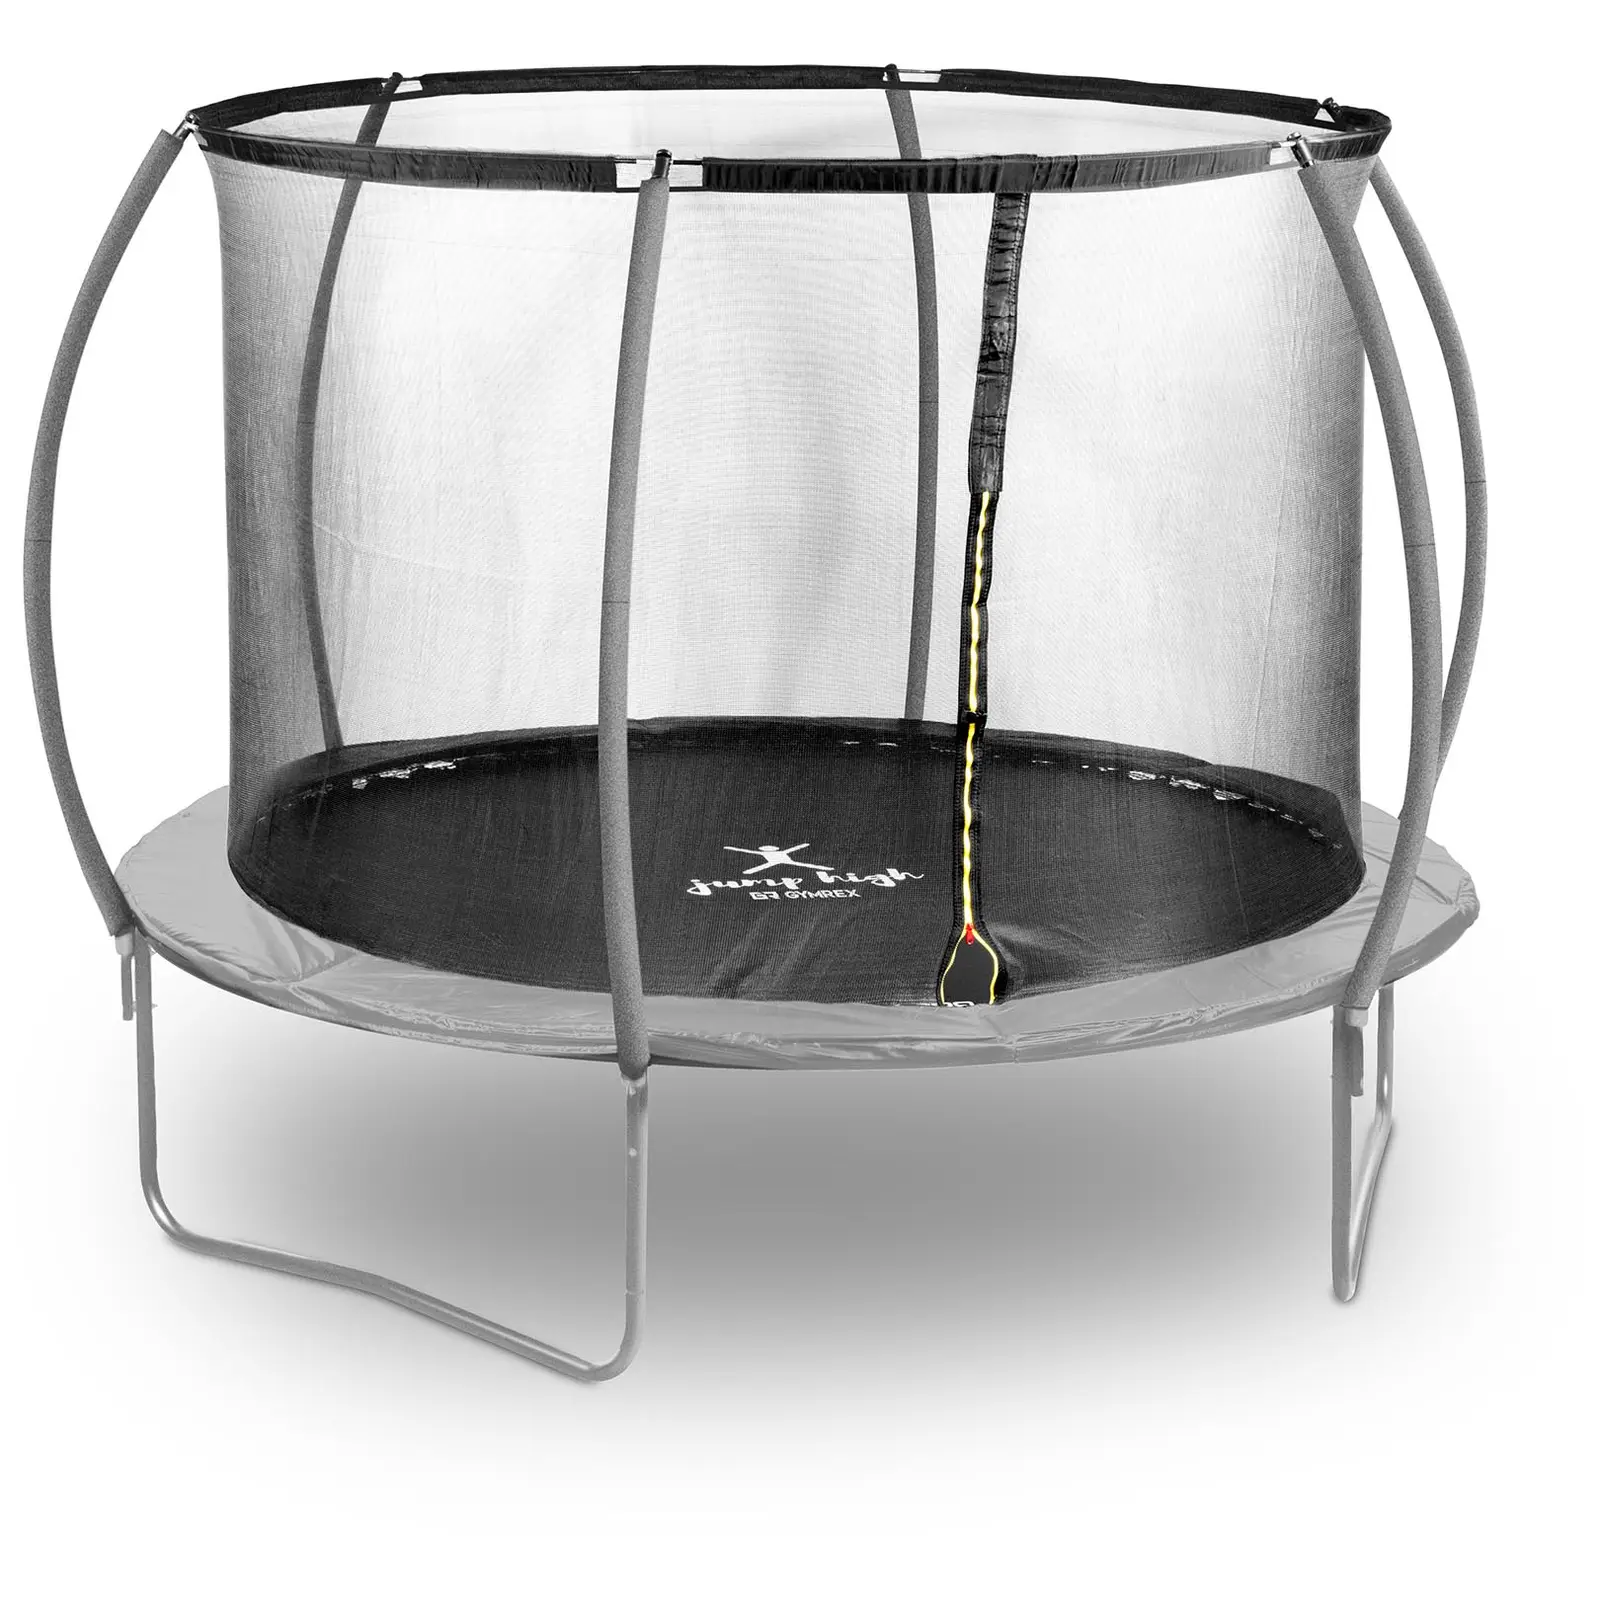 Trampolin med net - 305 cm i diameter - 100 kg - sort/grå